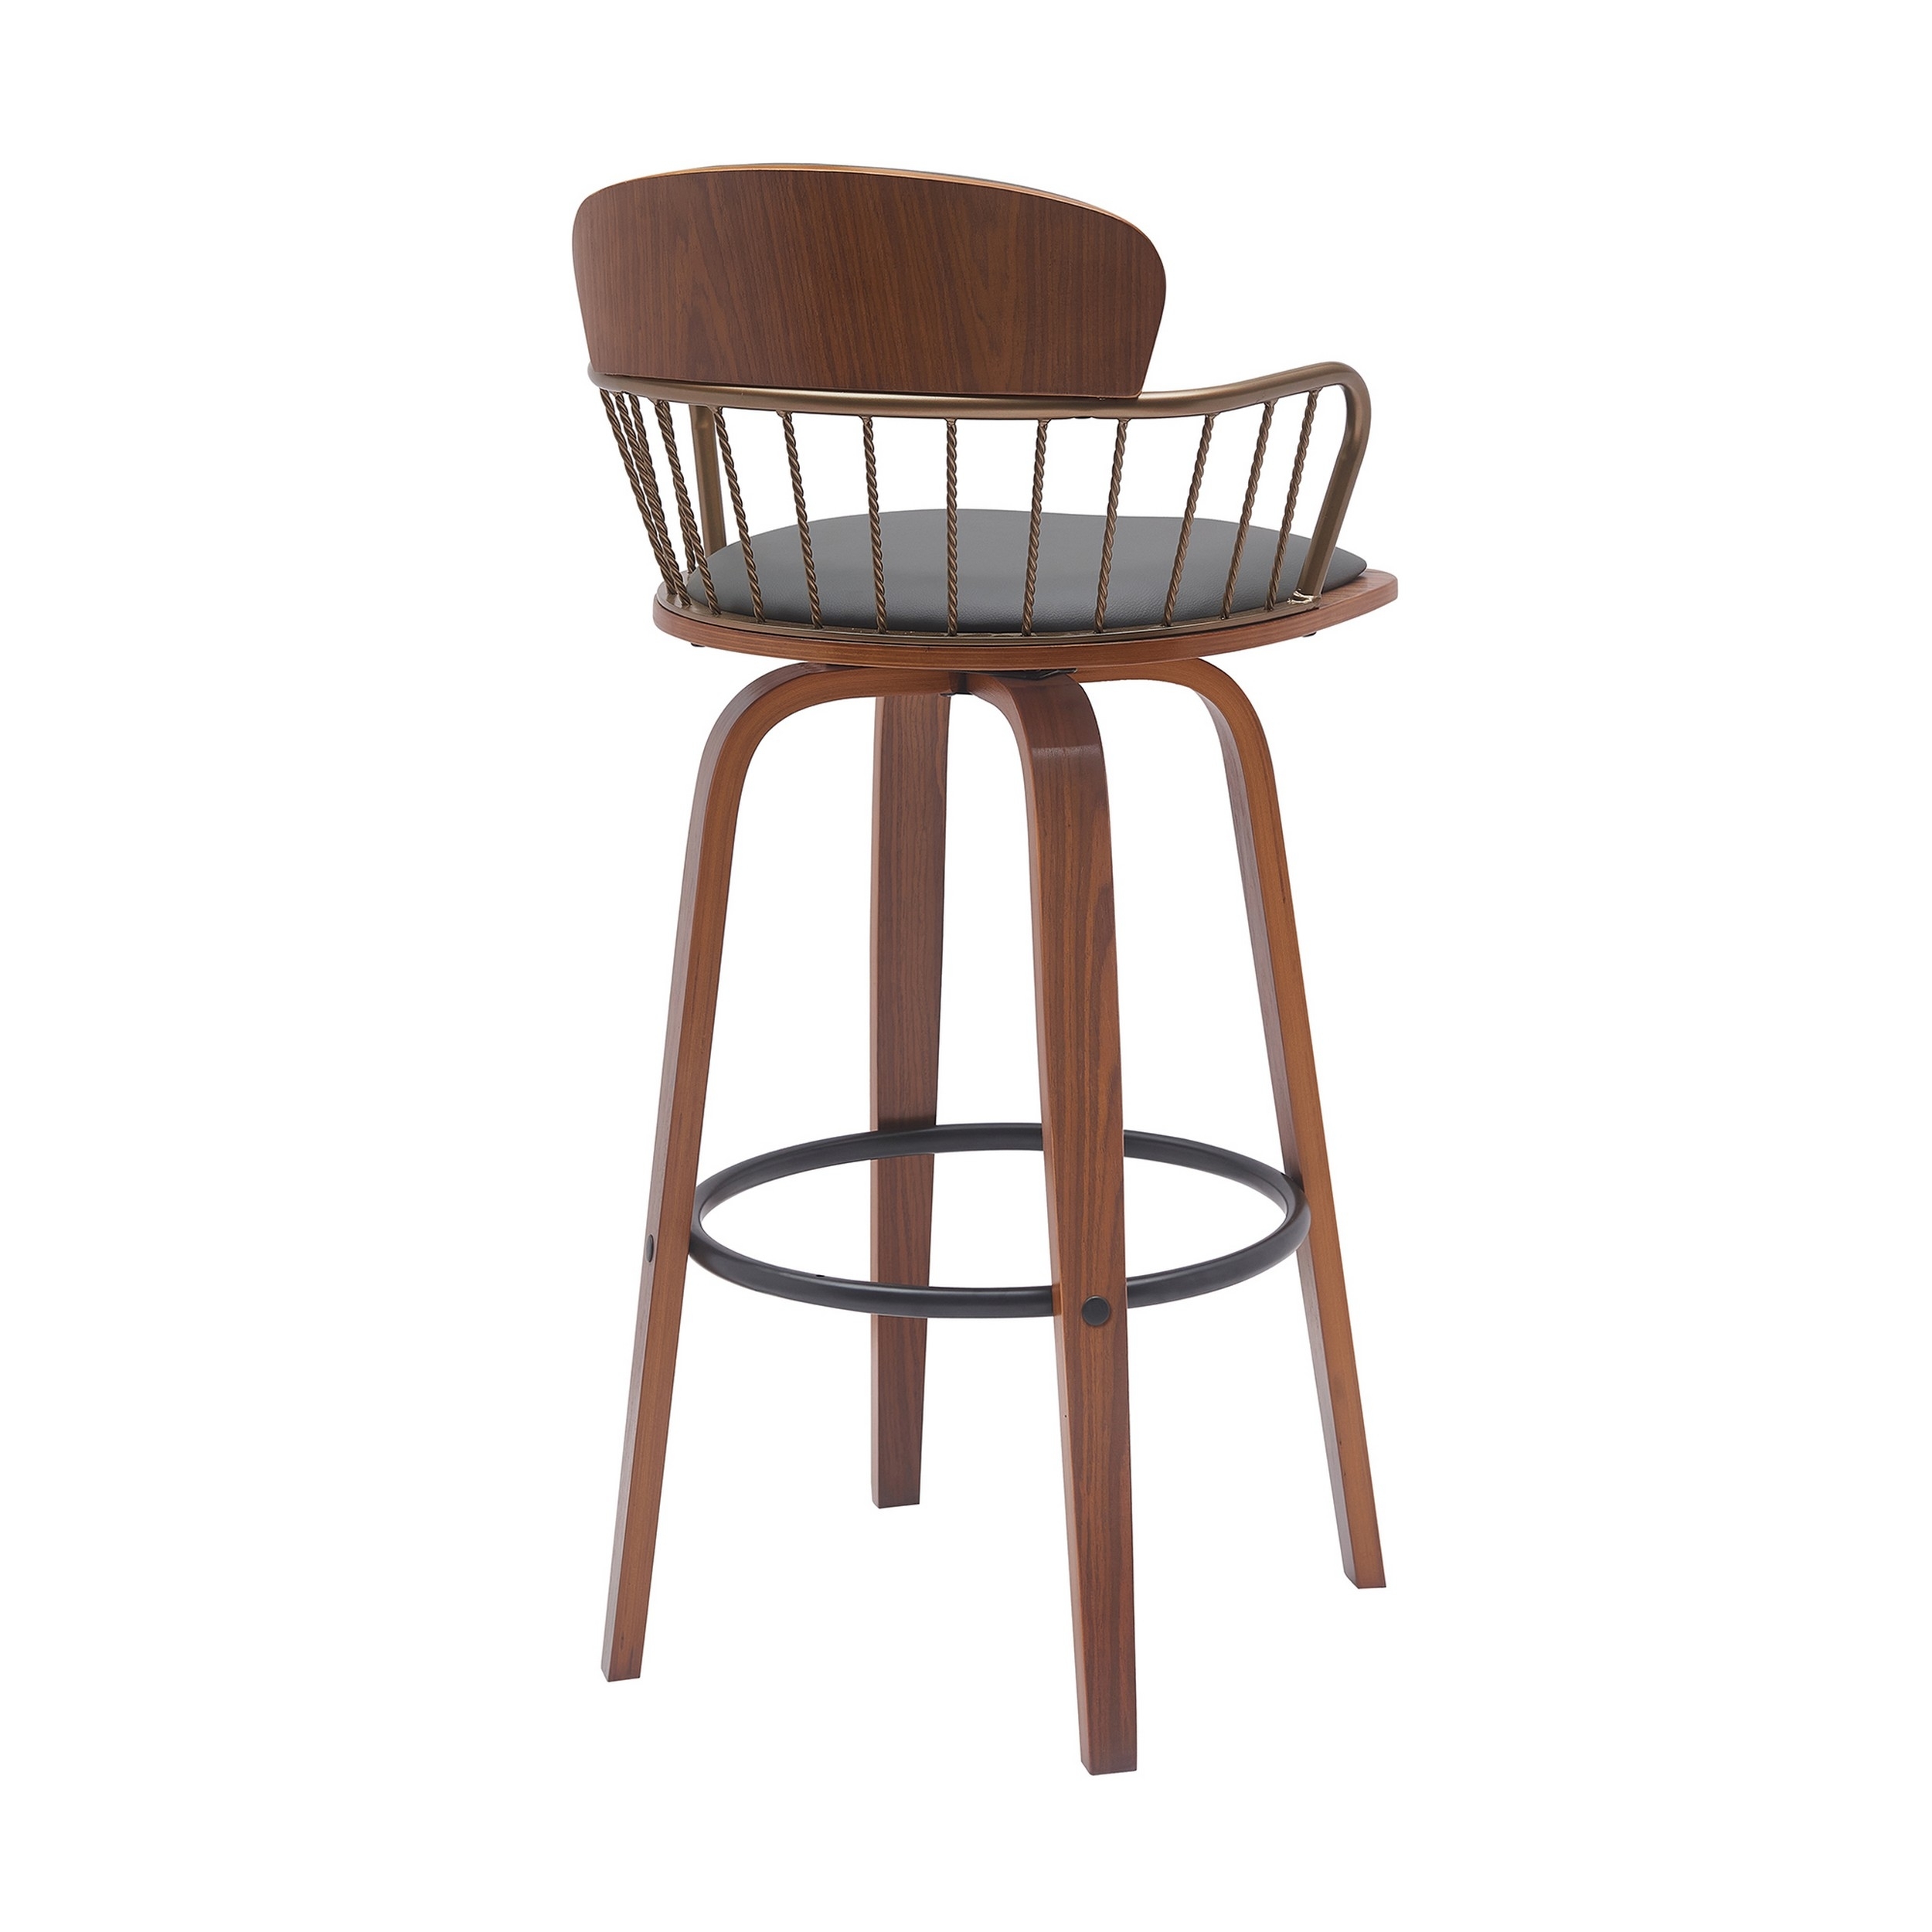 Wiz 30 Inch Barstool Chair, Slatted Back, Gray Faux Leather, Walnut Brown - Saltoro Sherpi